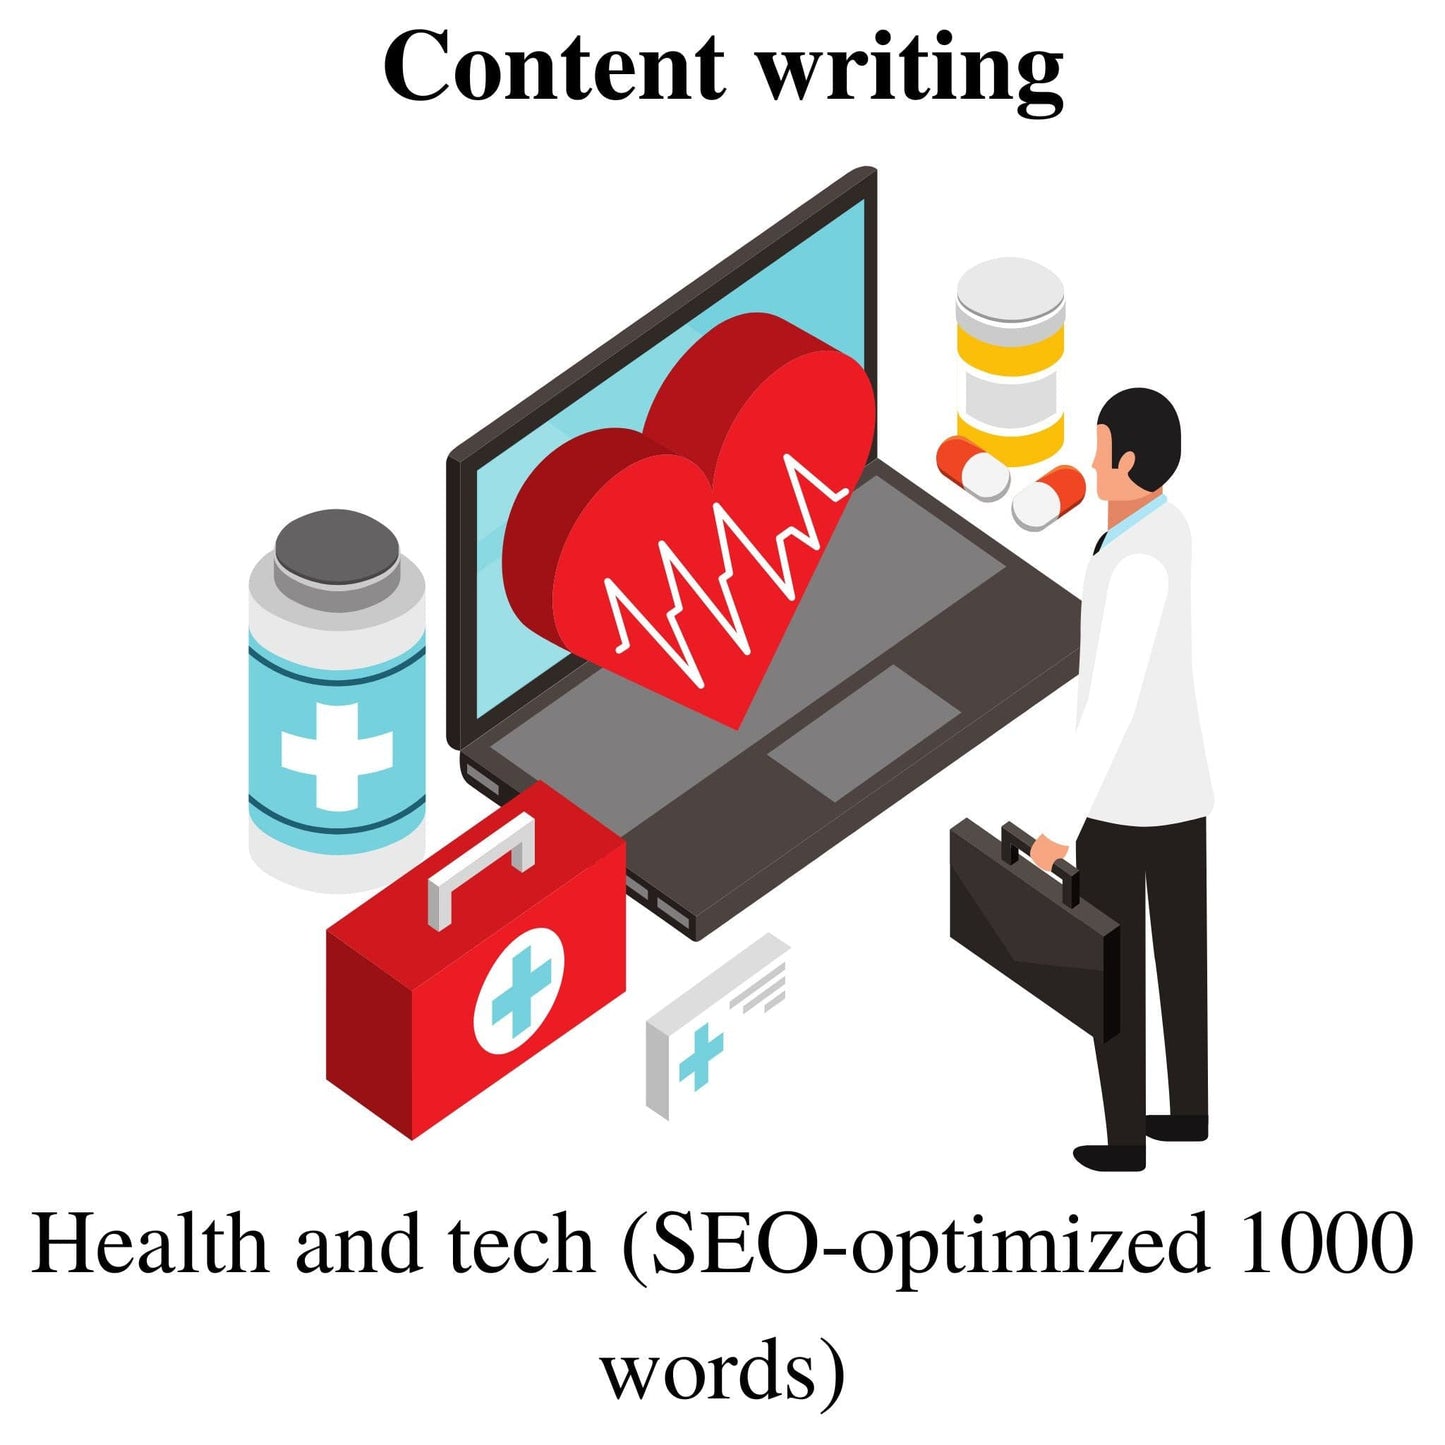 Health and tech (SEO-optimized 1000 words)